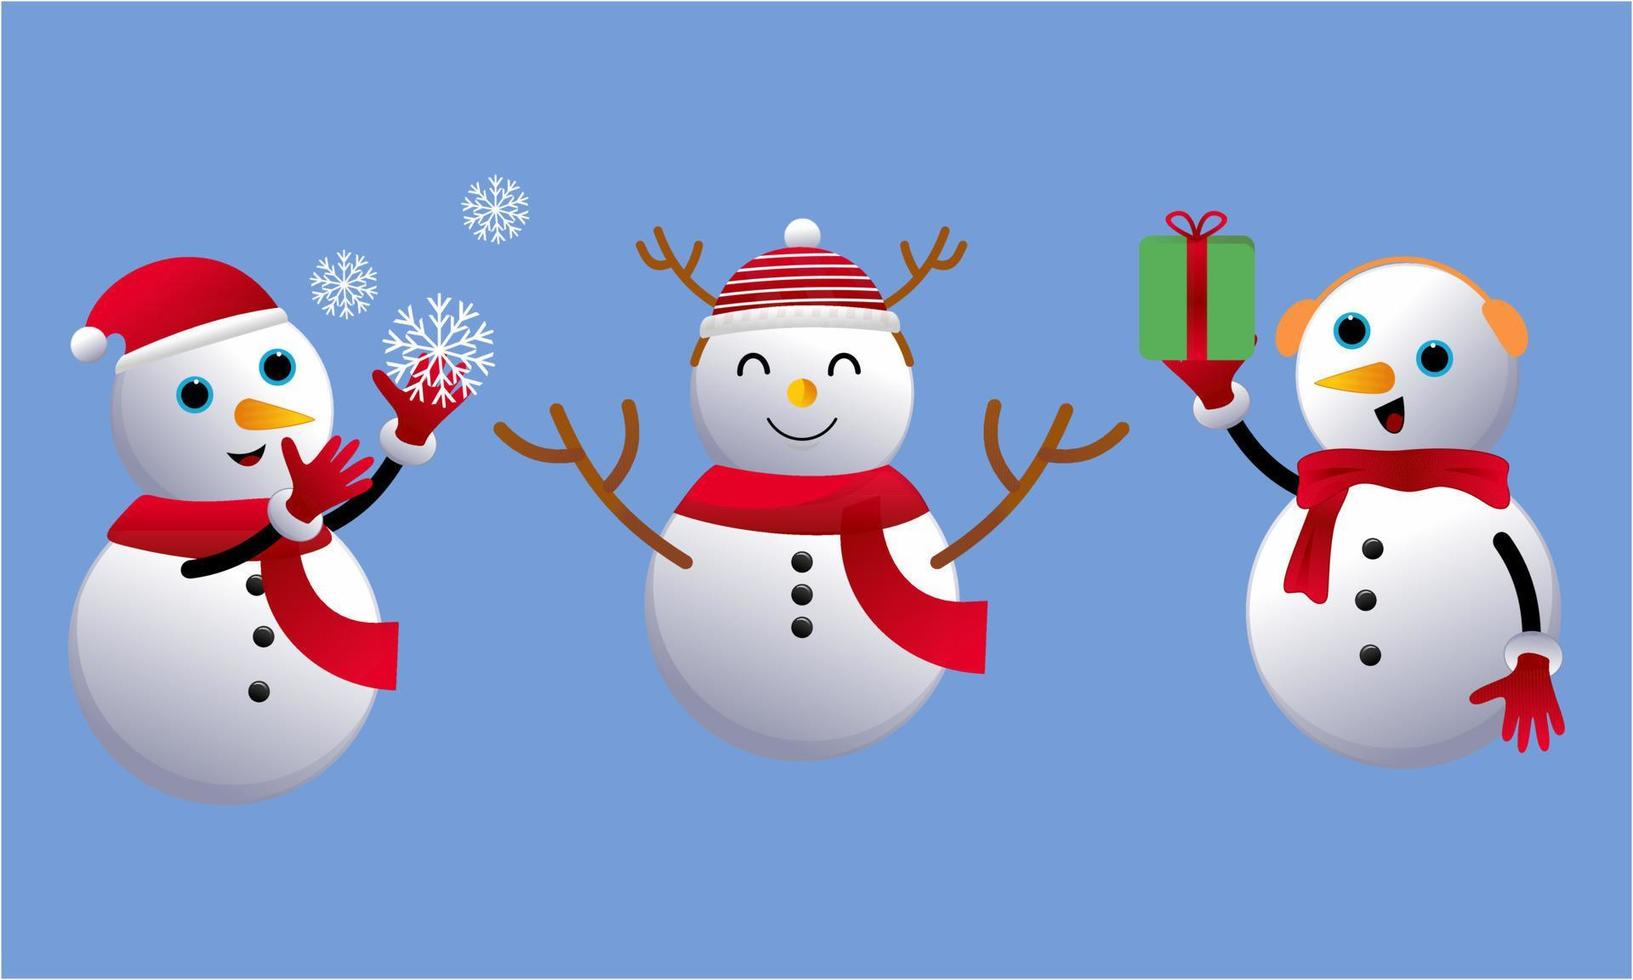 Set of cartoon snowmen in different poses vector illustration